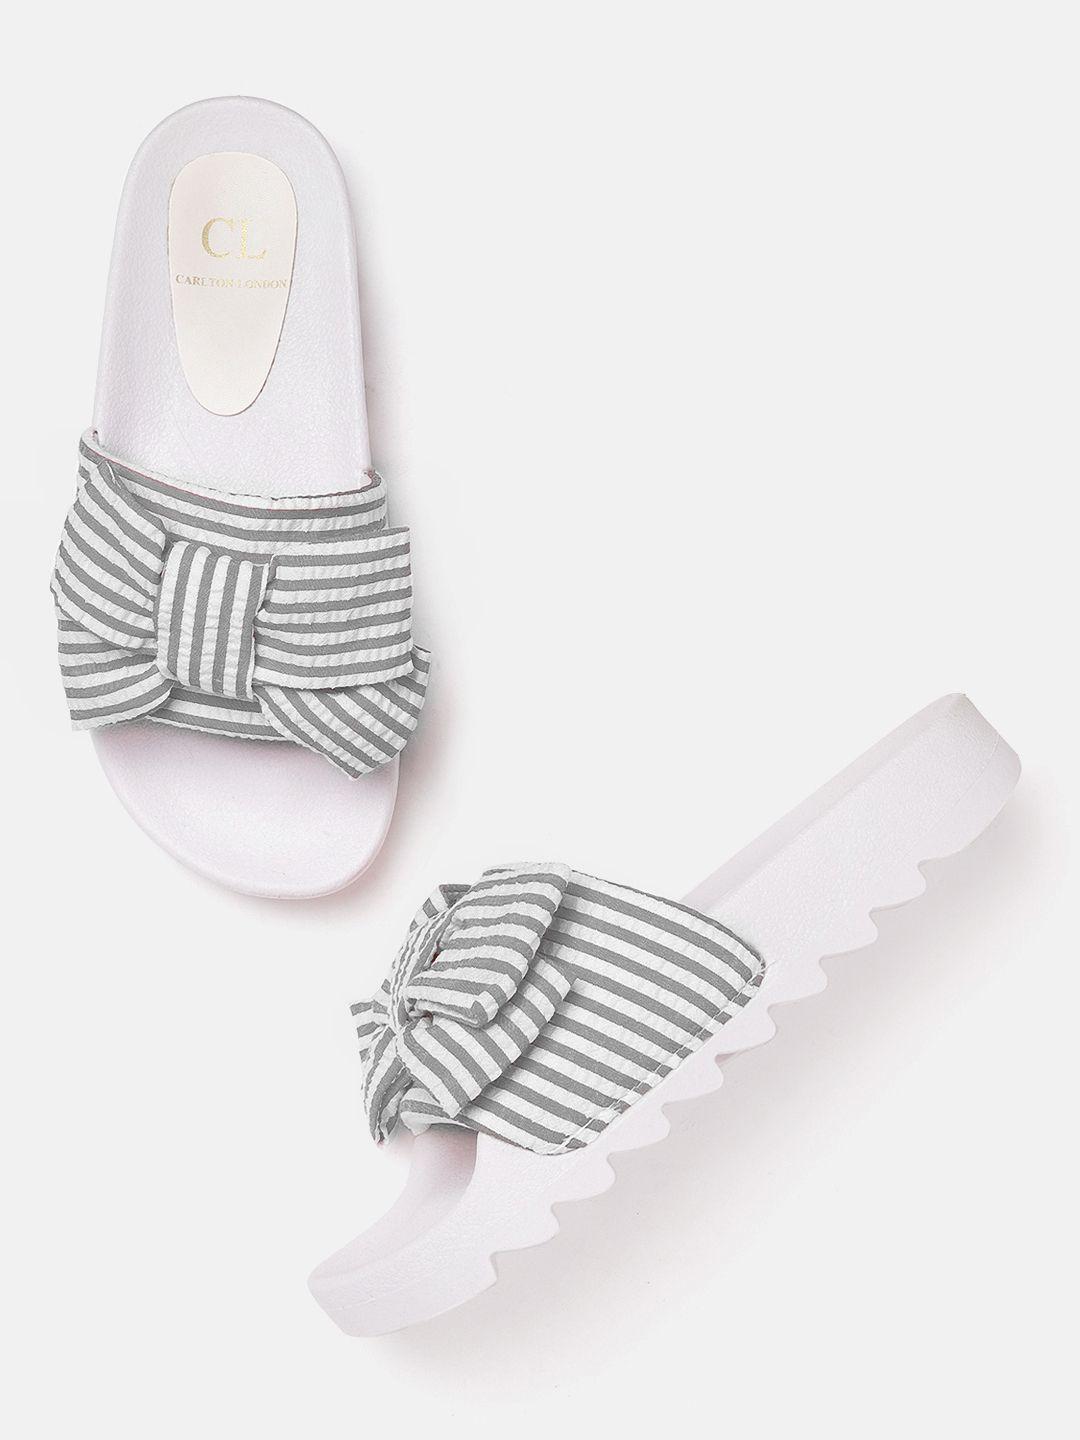 carlton london women charcoal grey & white striped open toe flats with bow detail